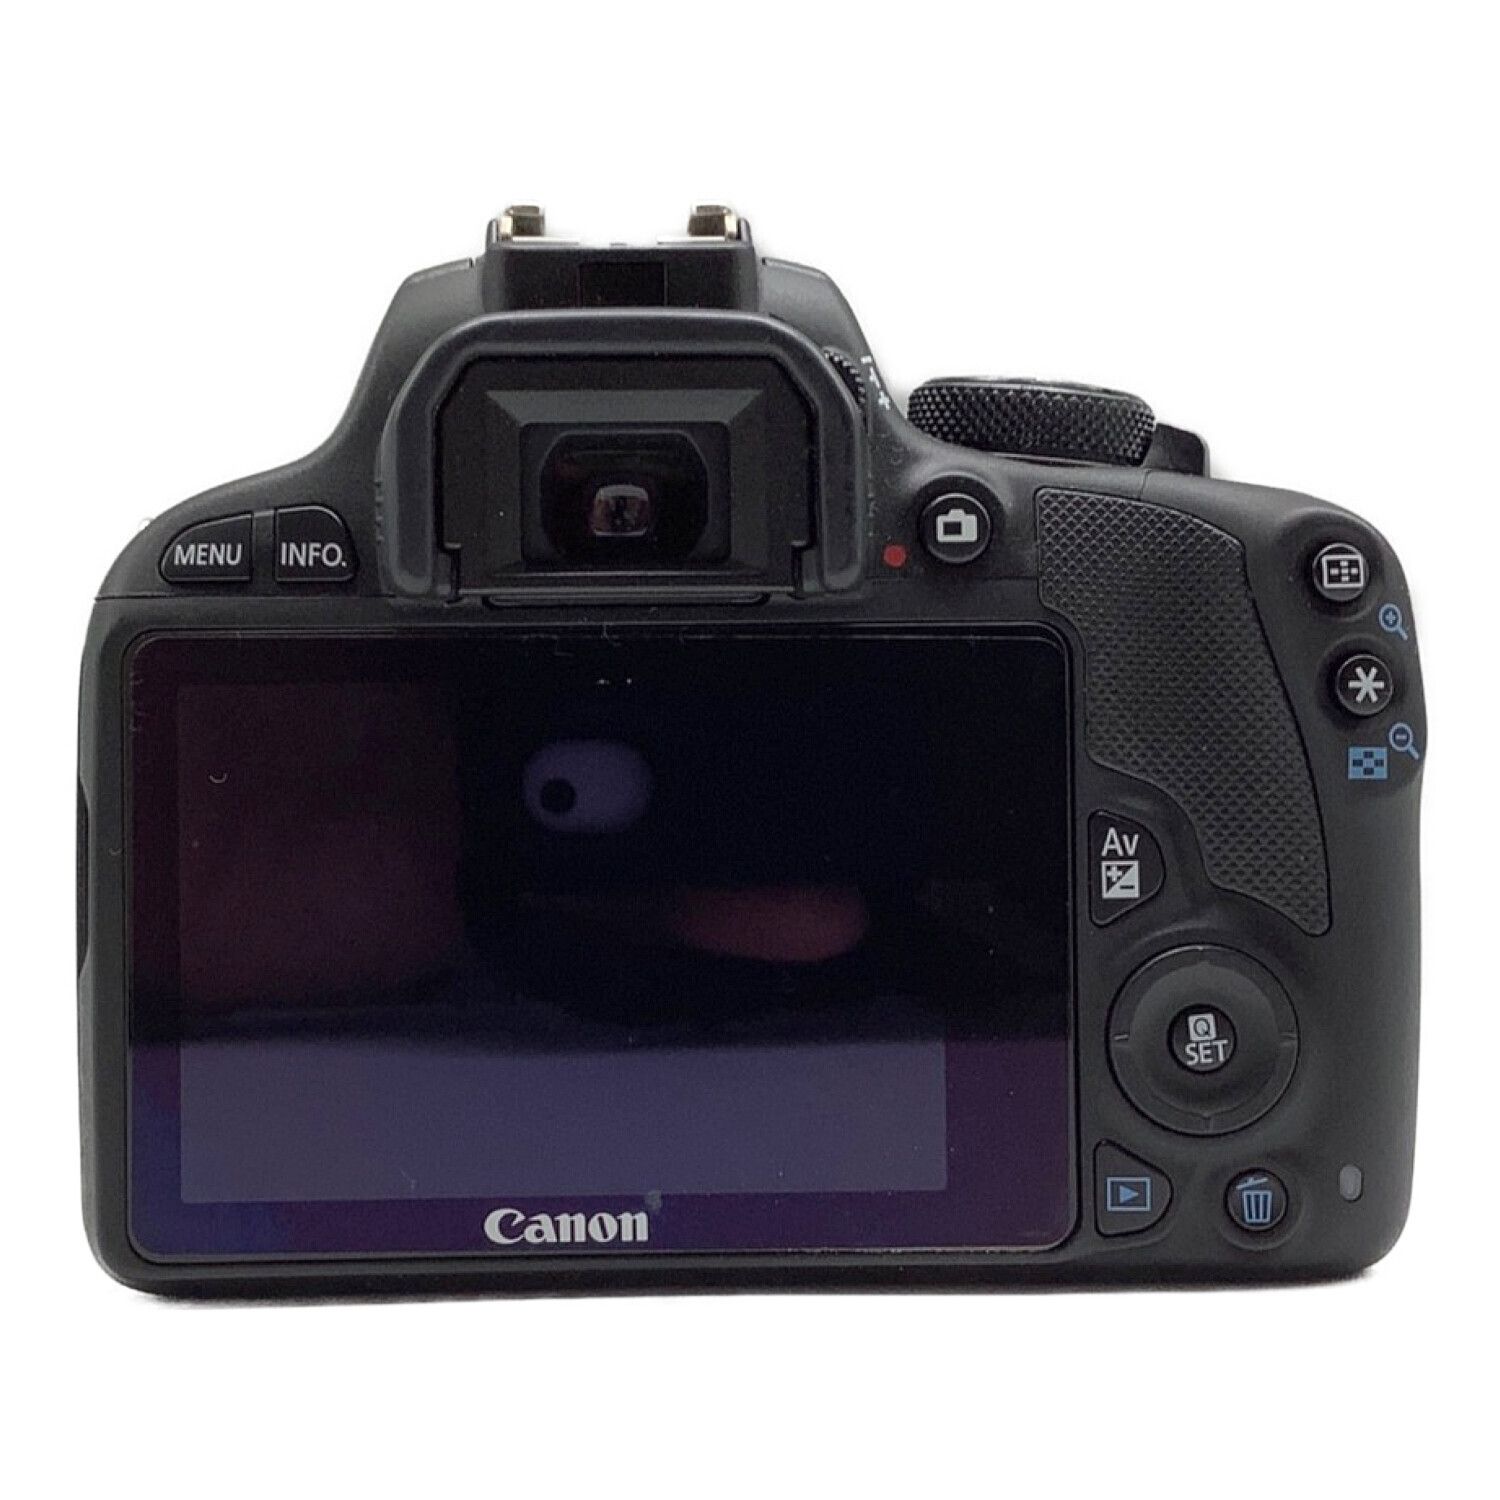 Canon EOS kiss X7i SDカード付き!! - www.sorbillomenu.com